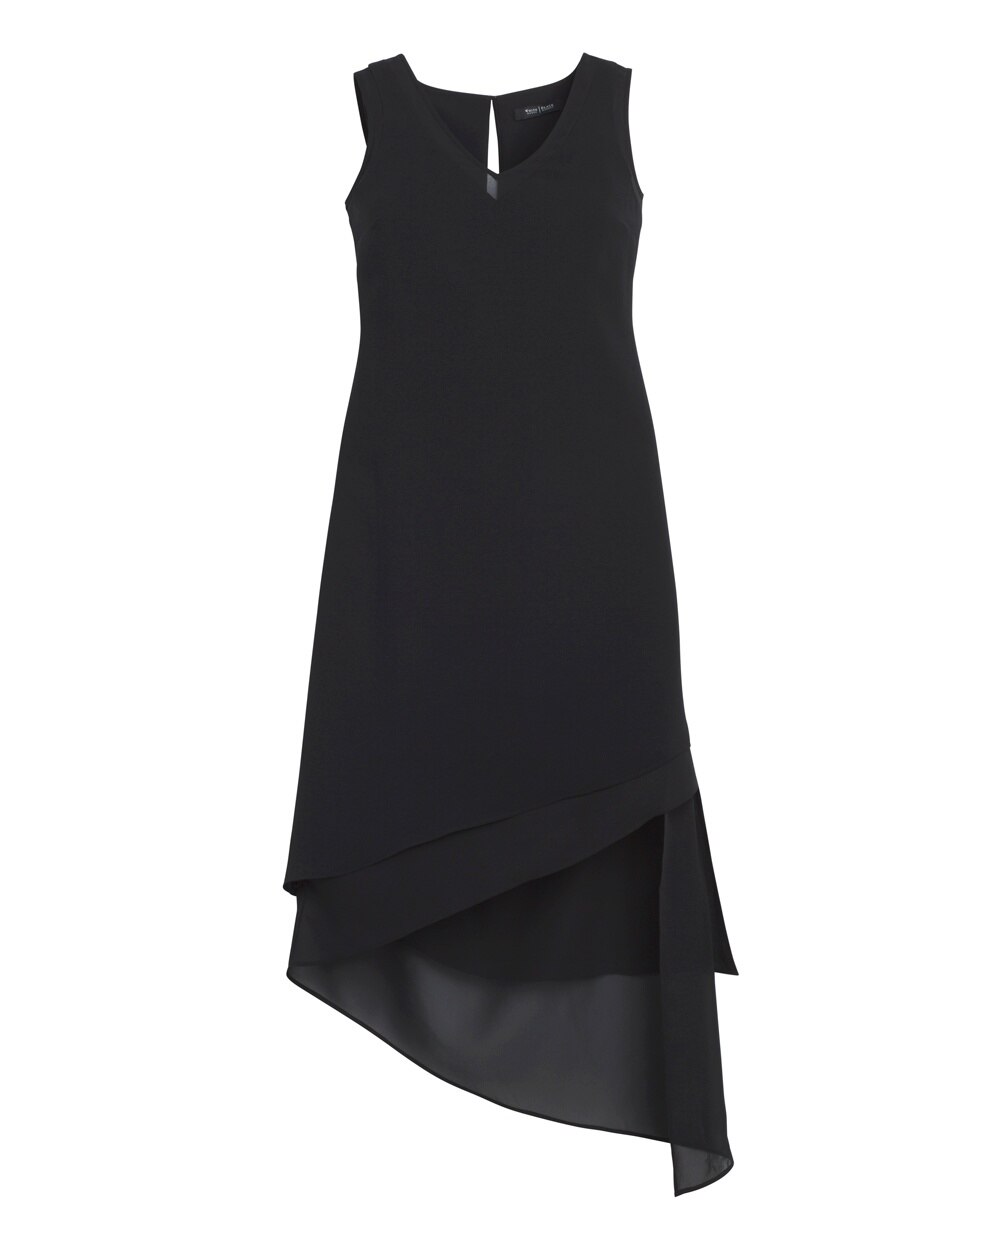 Layered Asymmetrical Dress - White House Black Market